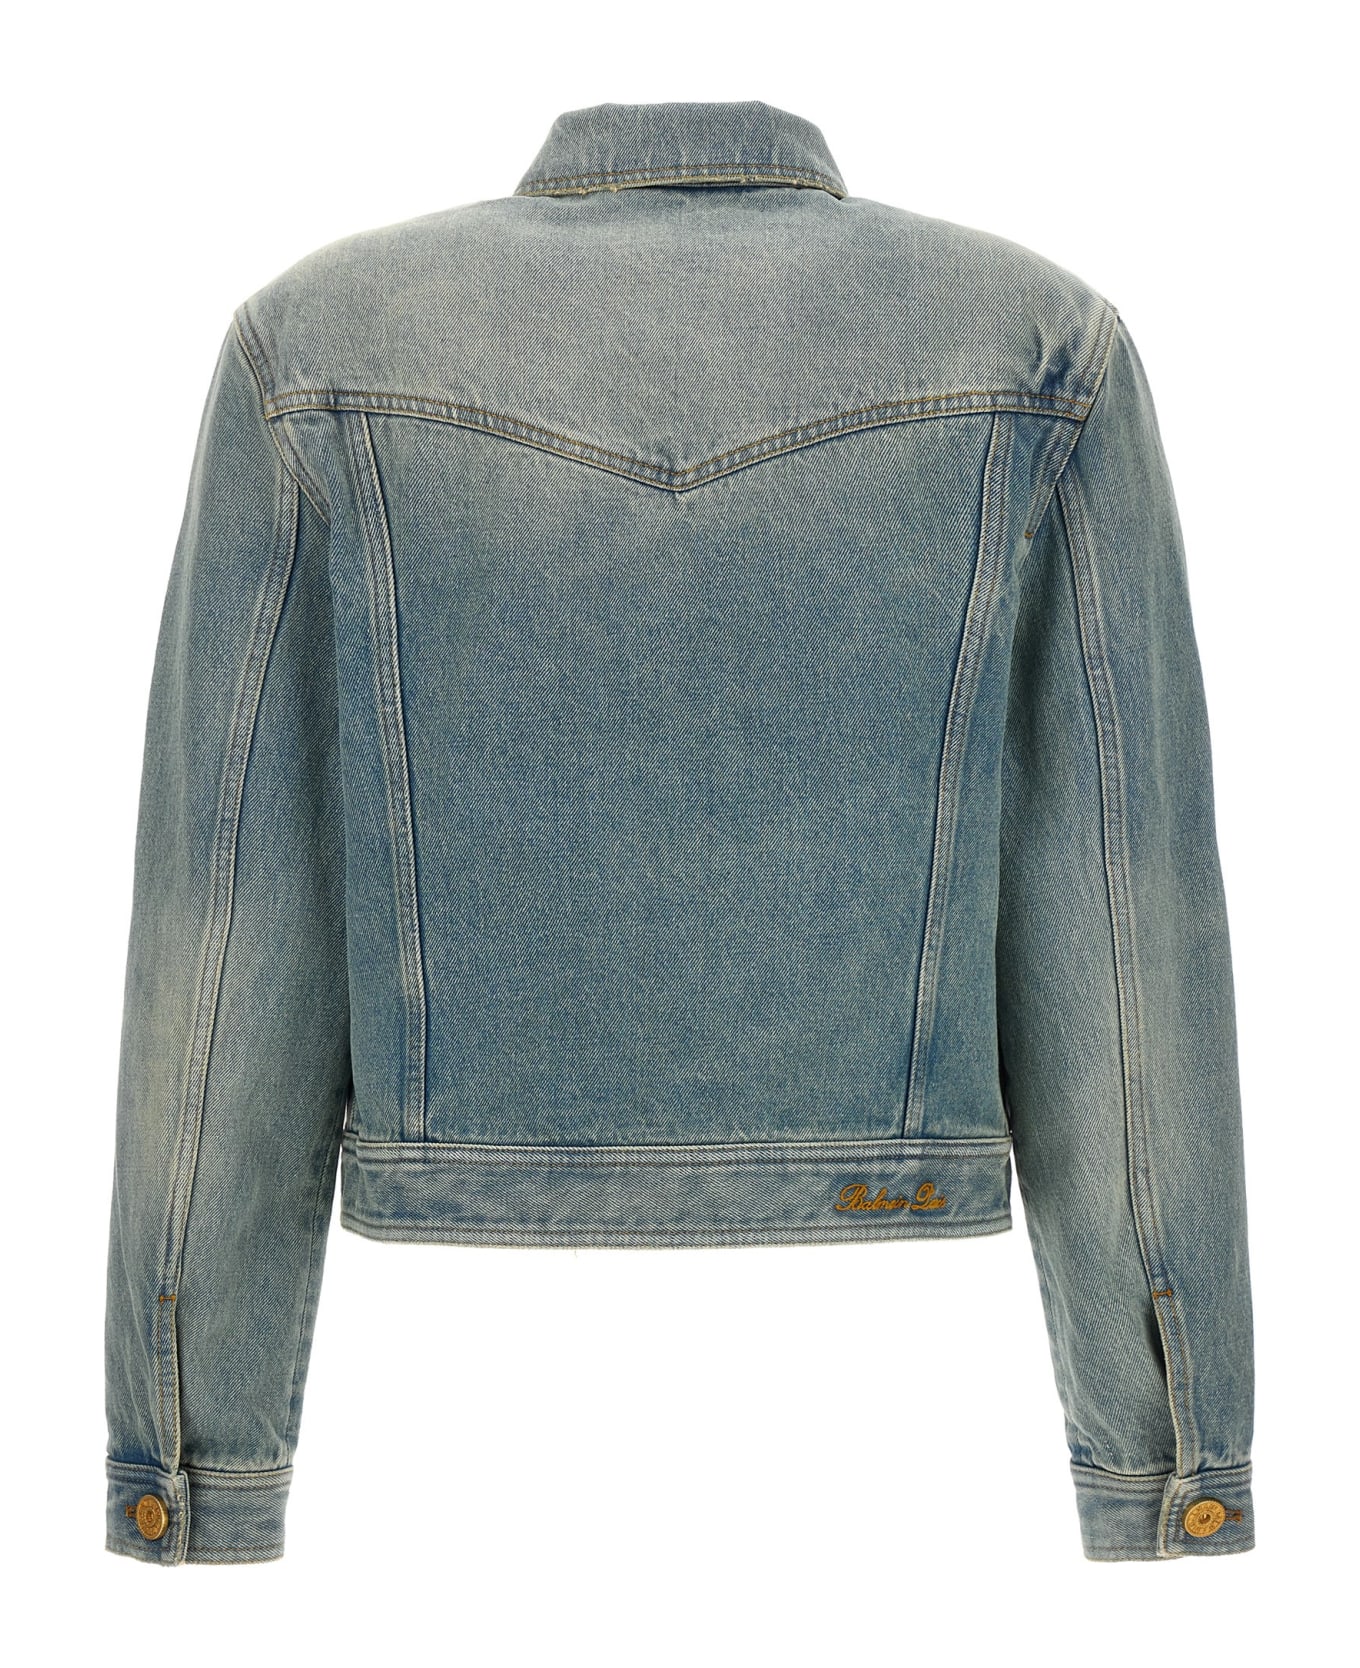 Balmain Vintage Denim Jacket - Blue ジャケット